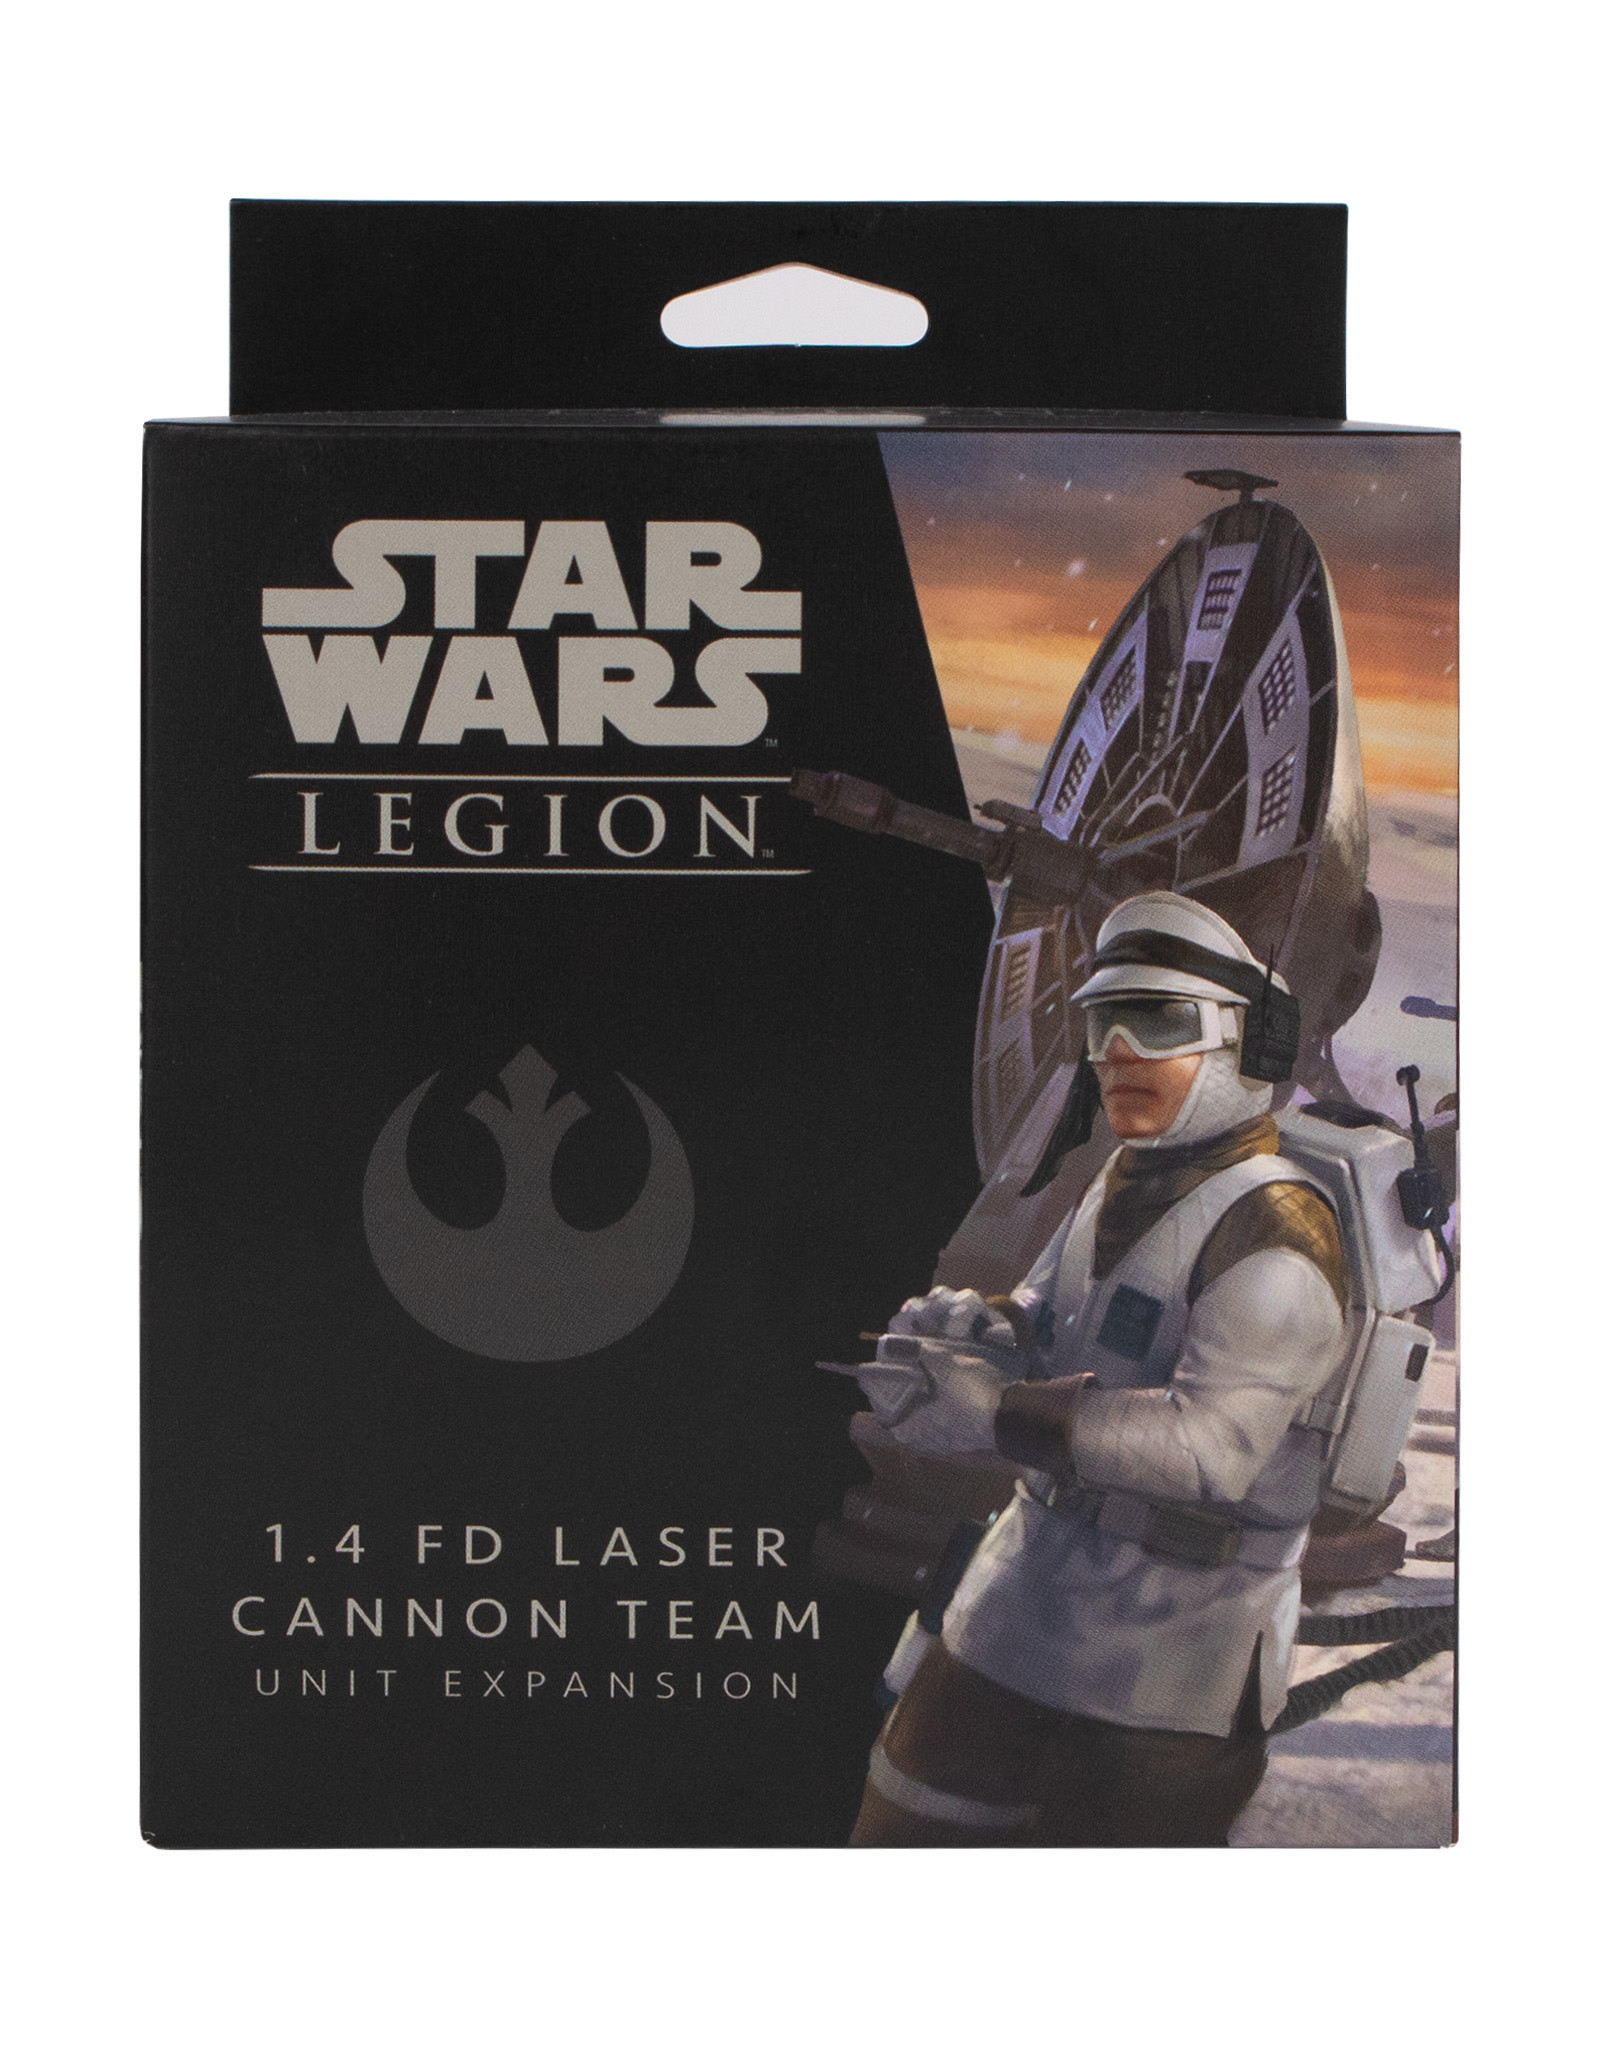 STAR WARS LEGION Star Wars Legion 1.4 FD Laser Cannon Team Unit Expansion